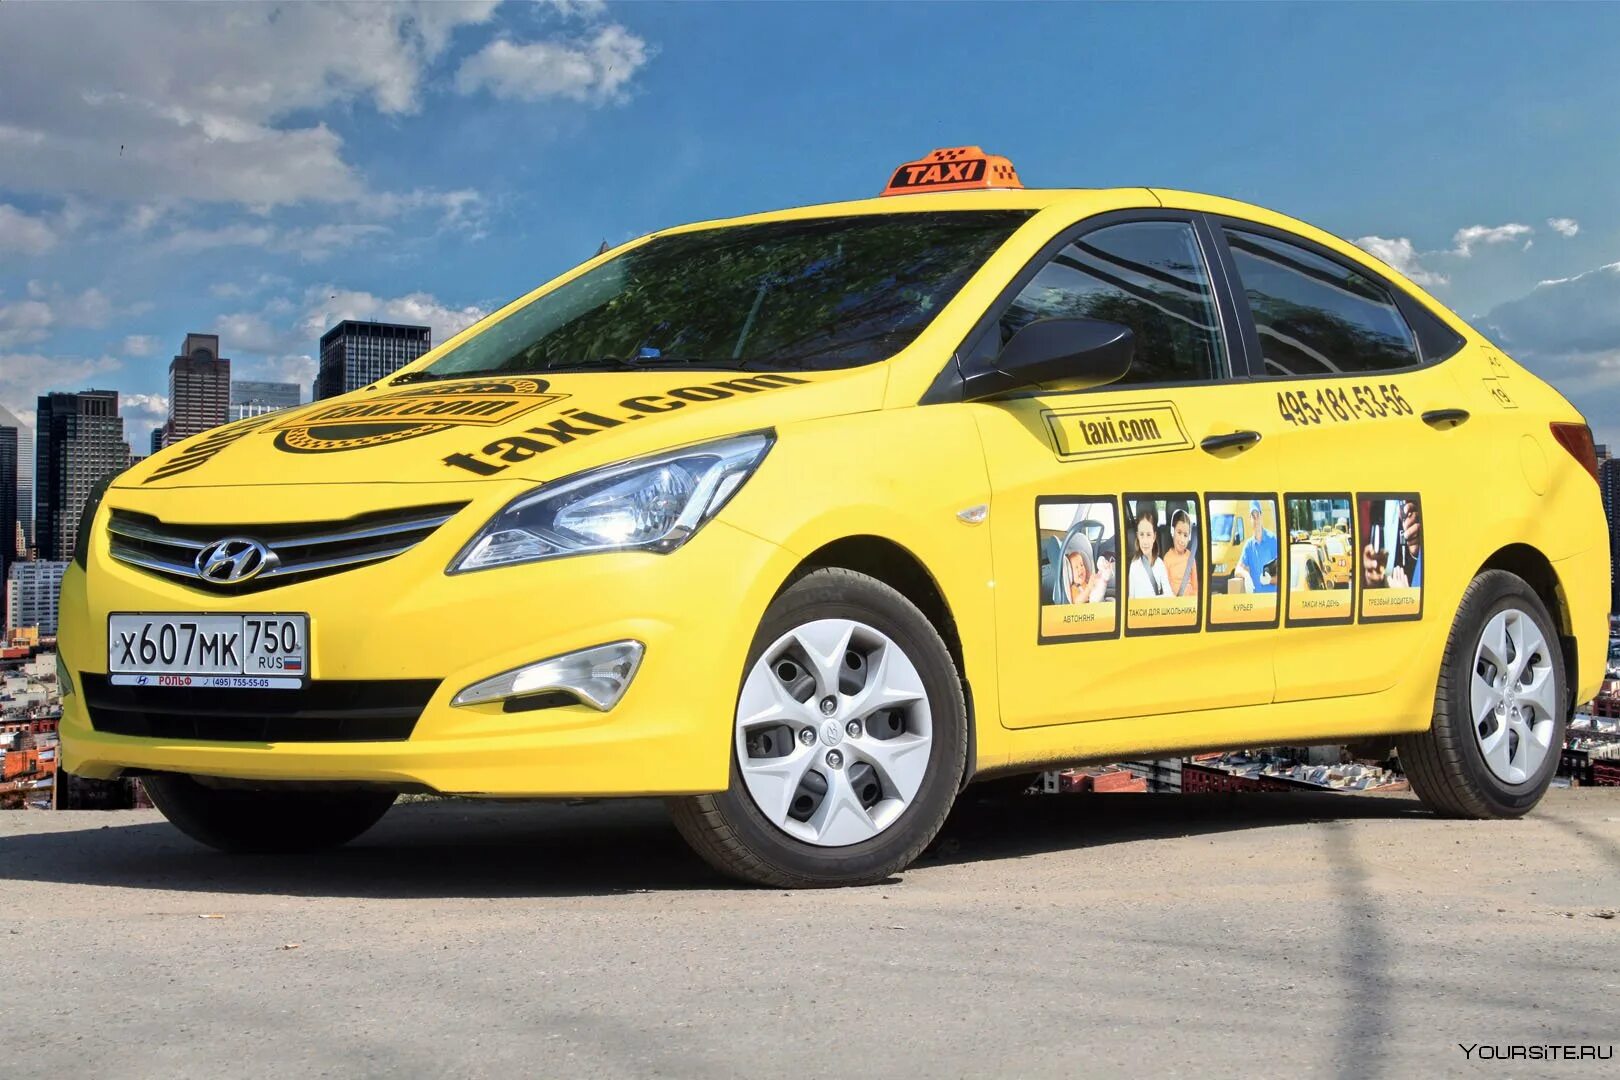 Hyundai Solaris Taxi. Машина "такси". Автомобиль «такси». Желтая машина такси. Такси ясенево